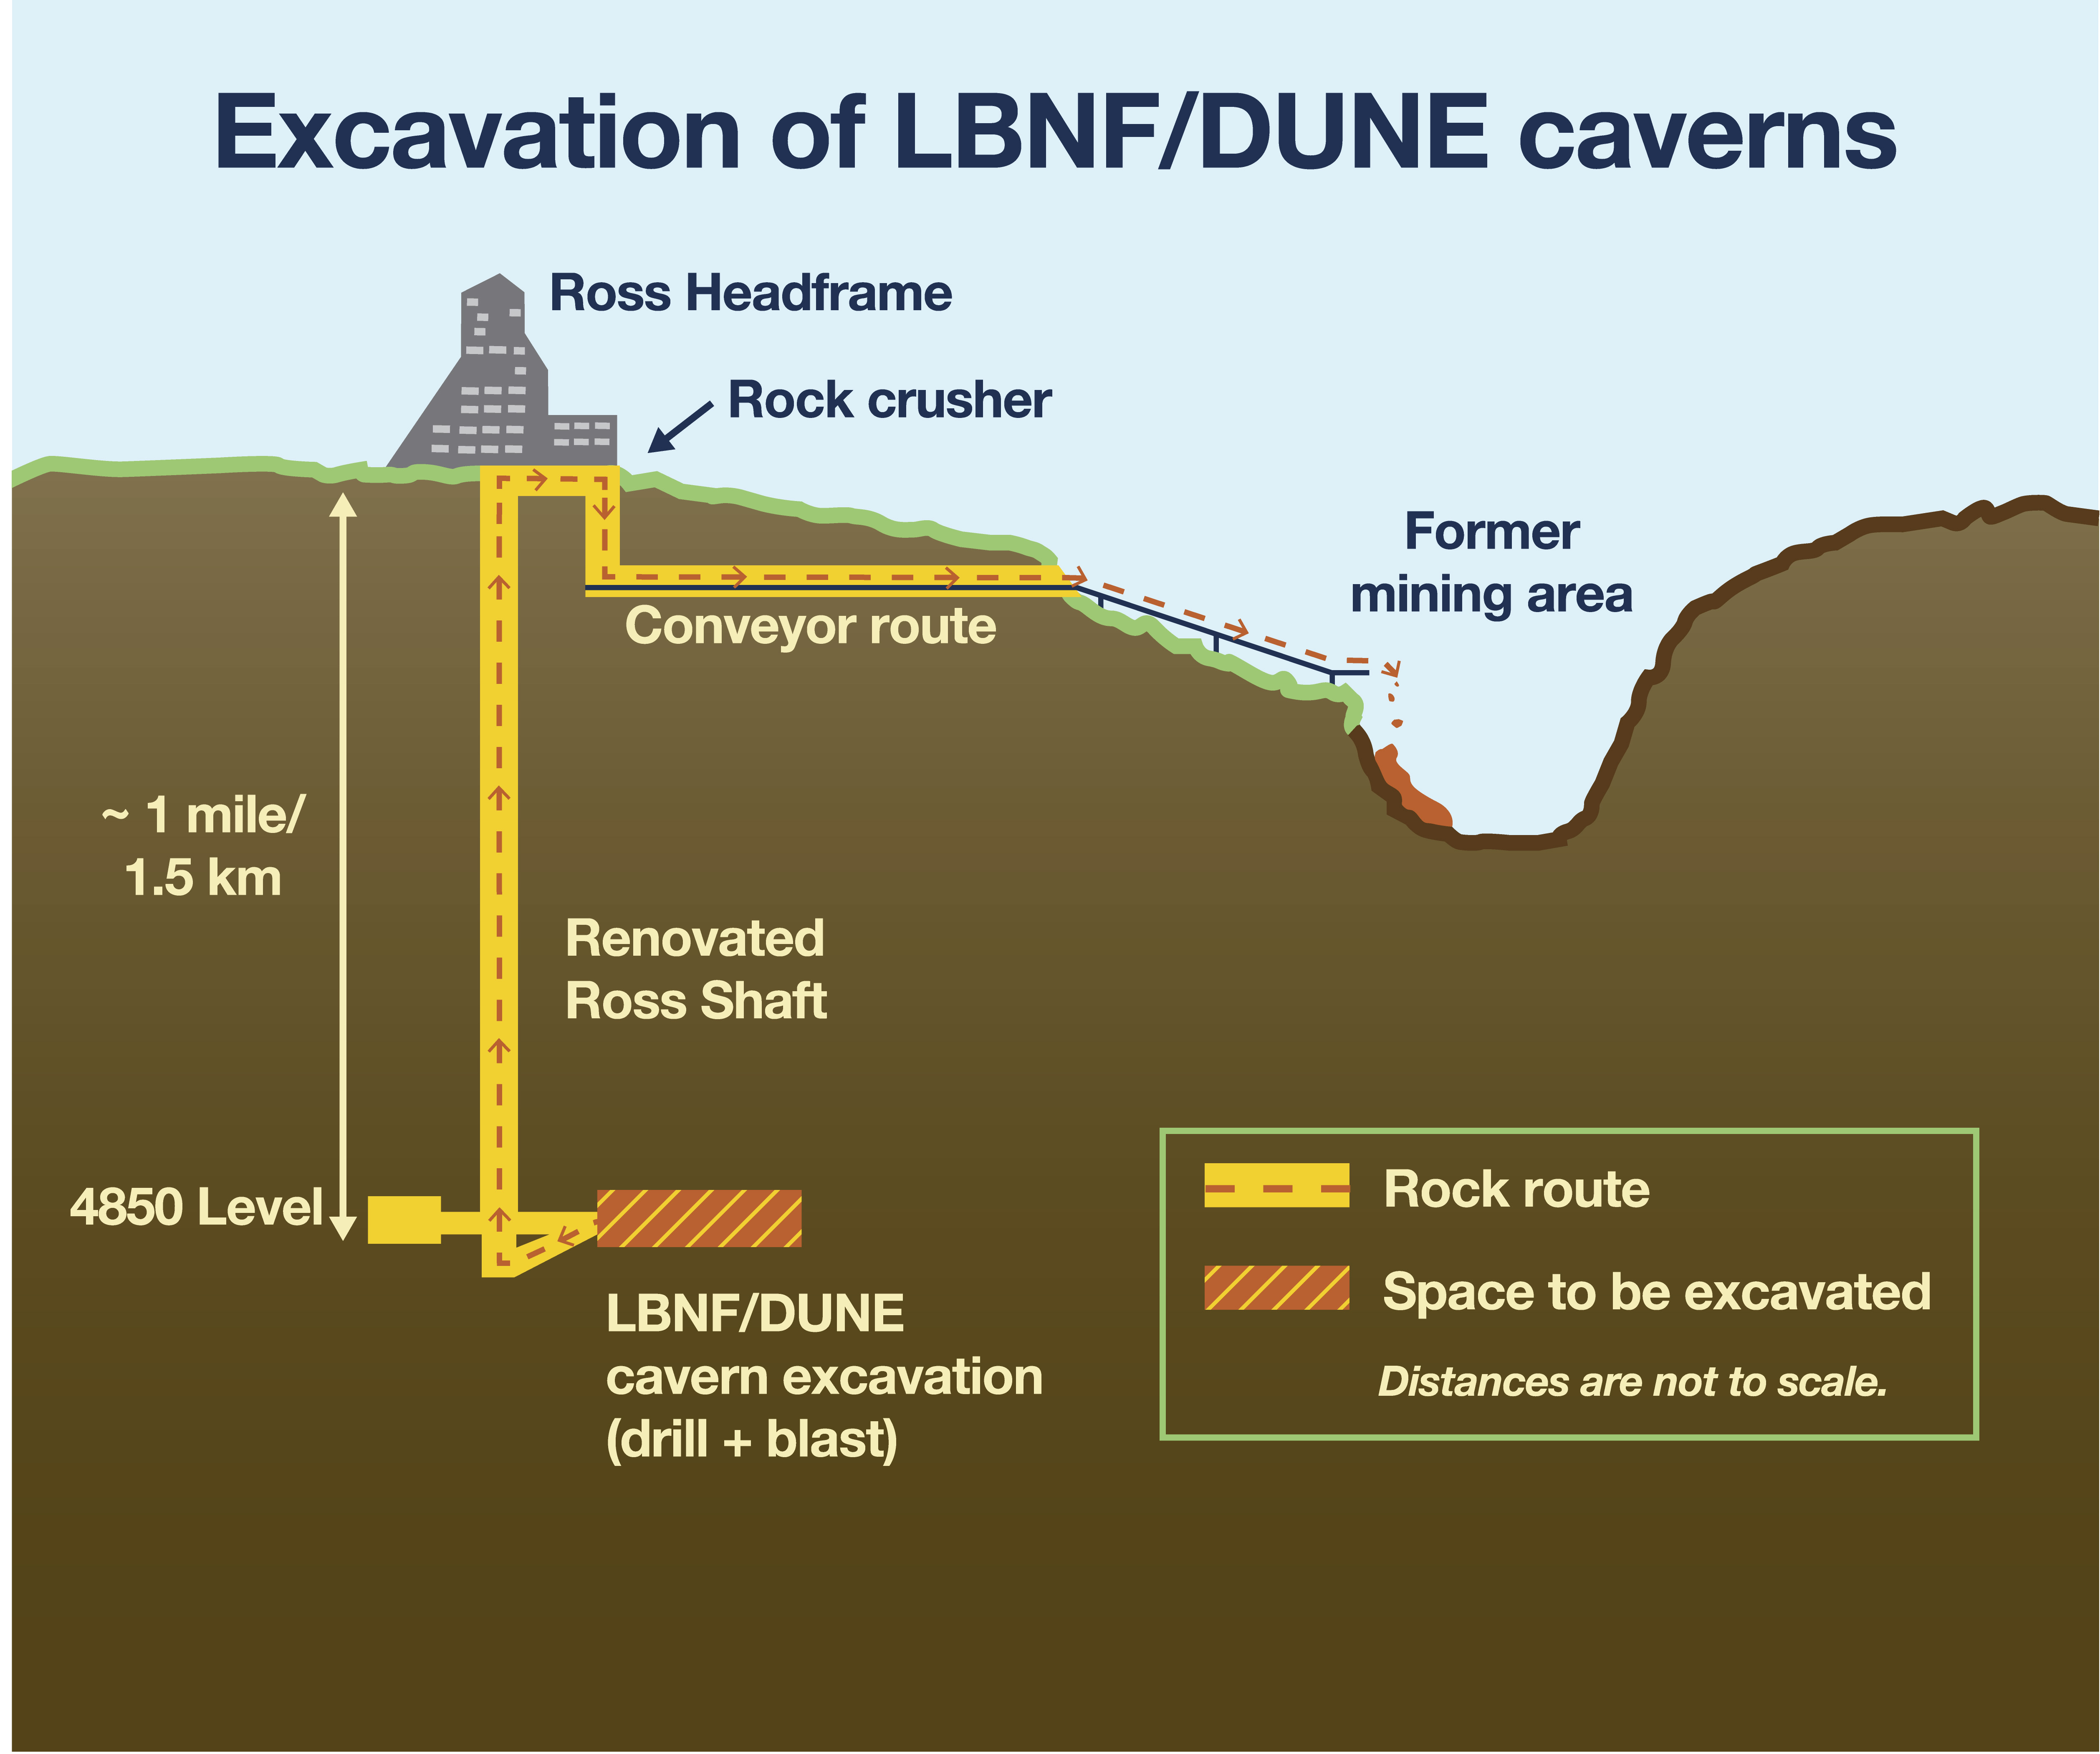 graphic depicts excavation pathways